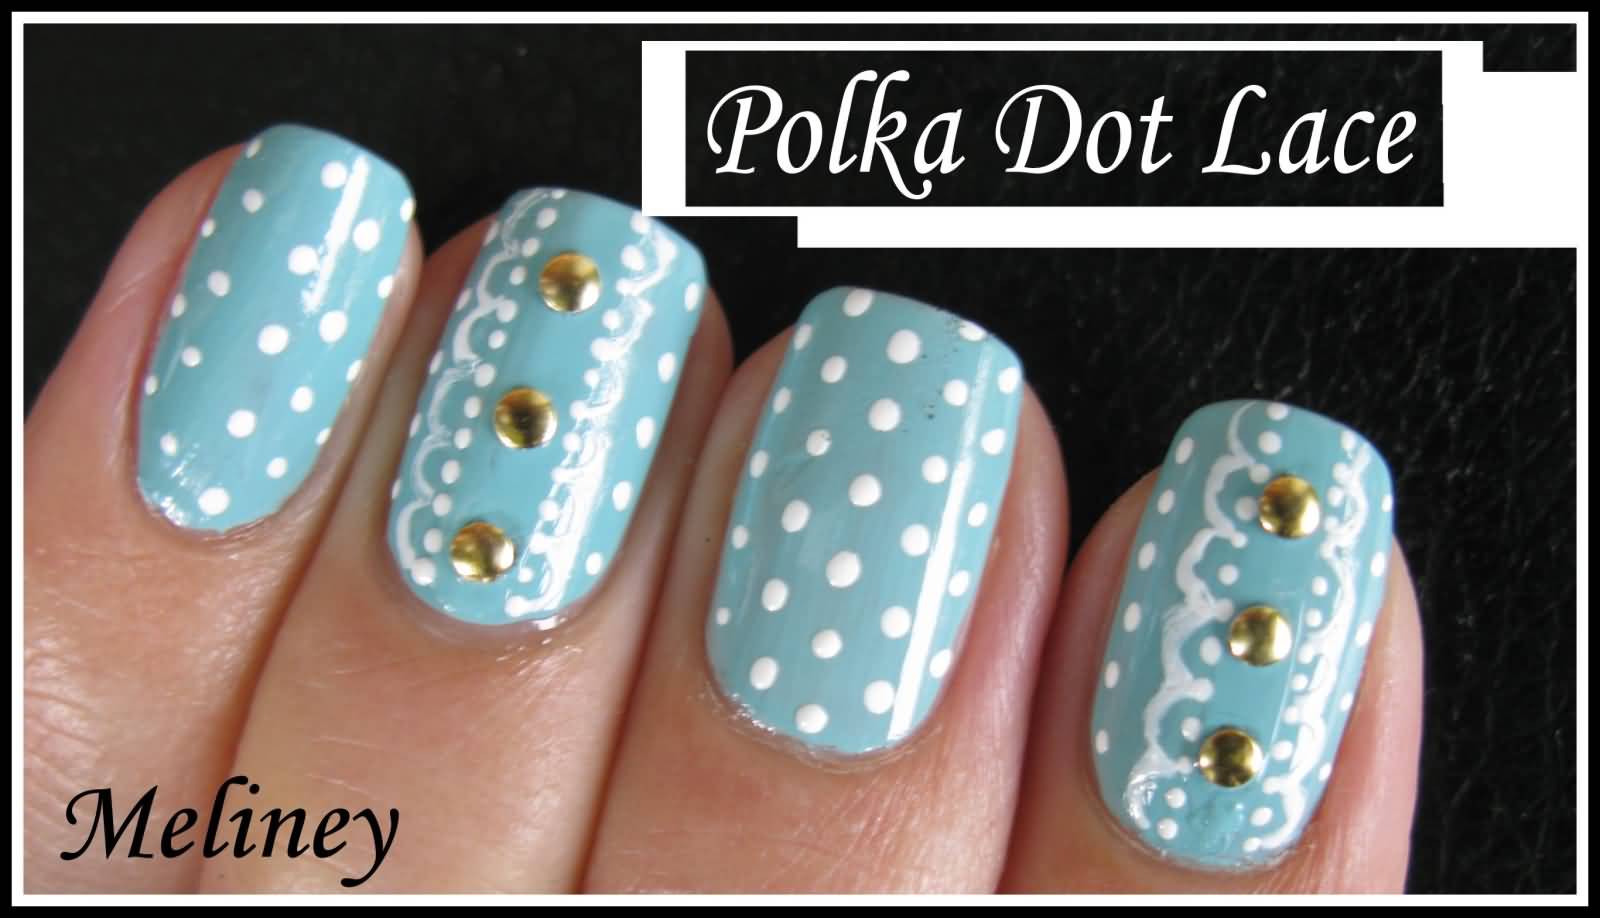 Polka Dots Lace Nail Art Design With Golden Caviar Beads